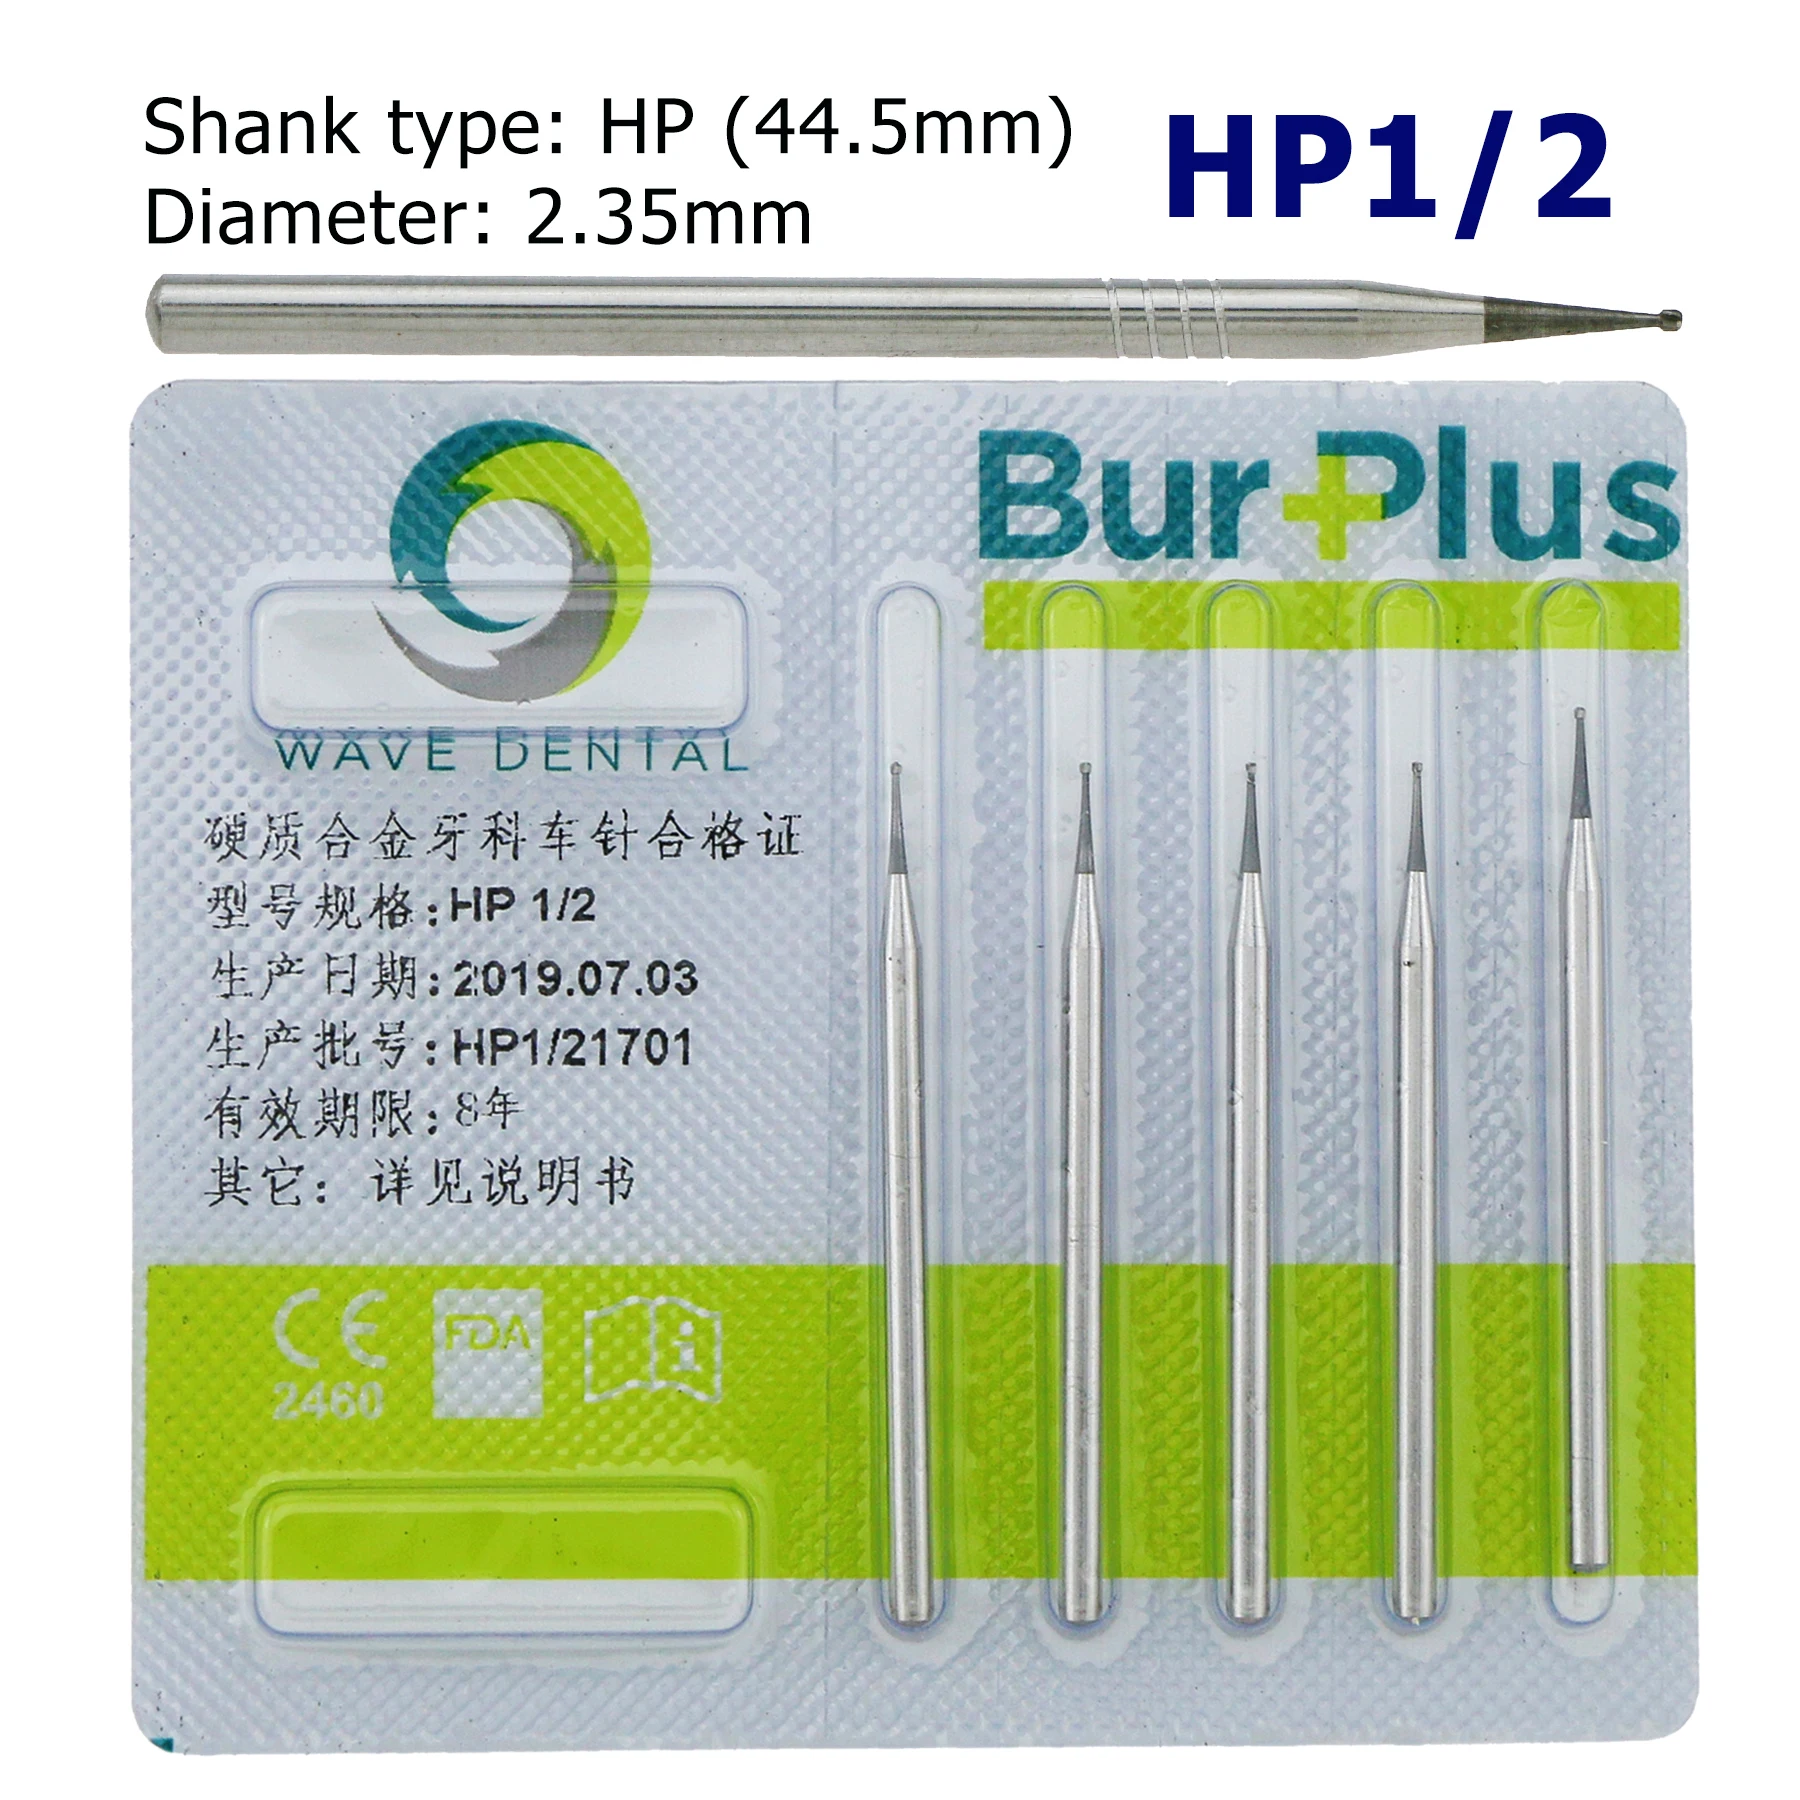 

5Pcs WAVE Dental Bur Plus Tungsten Carbide Round Drills Burs HP 1/2 Head 0.6mm For Low Speed Straight Nose Cone Handpiece 2.35mm